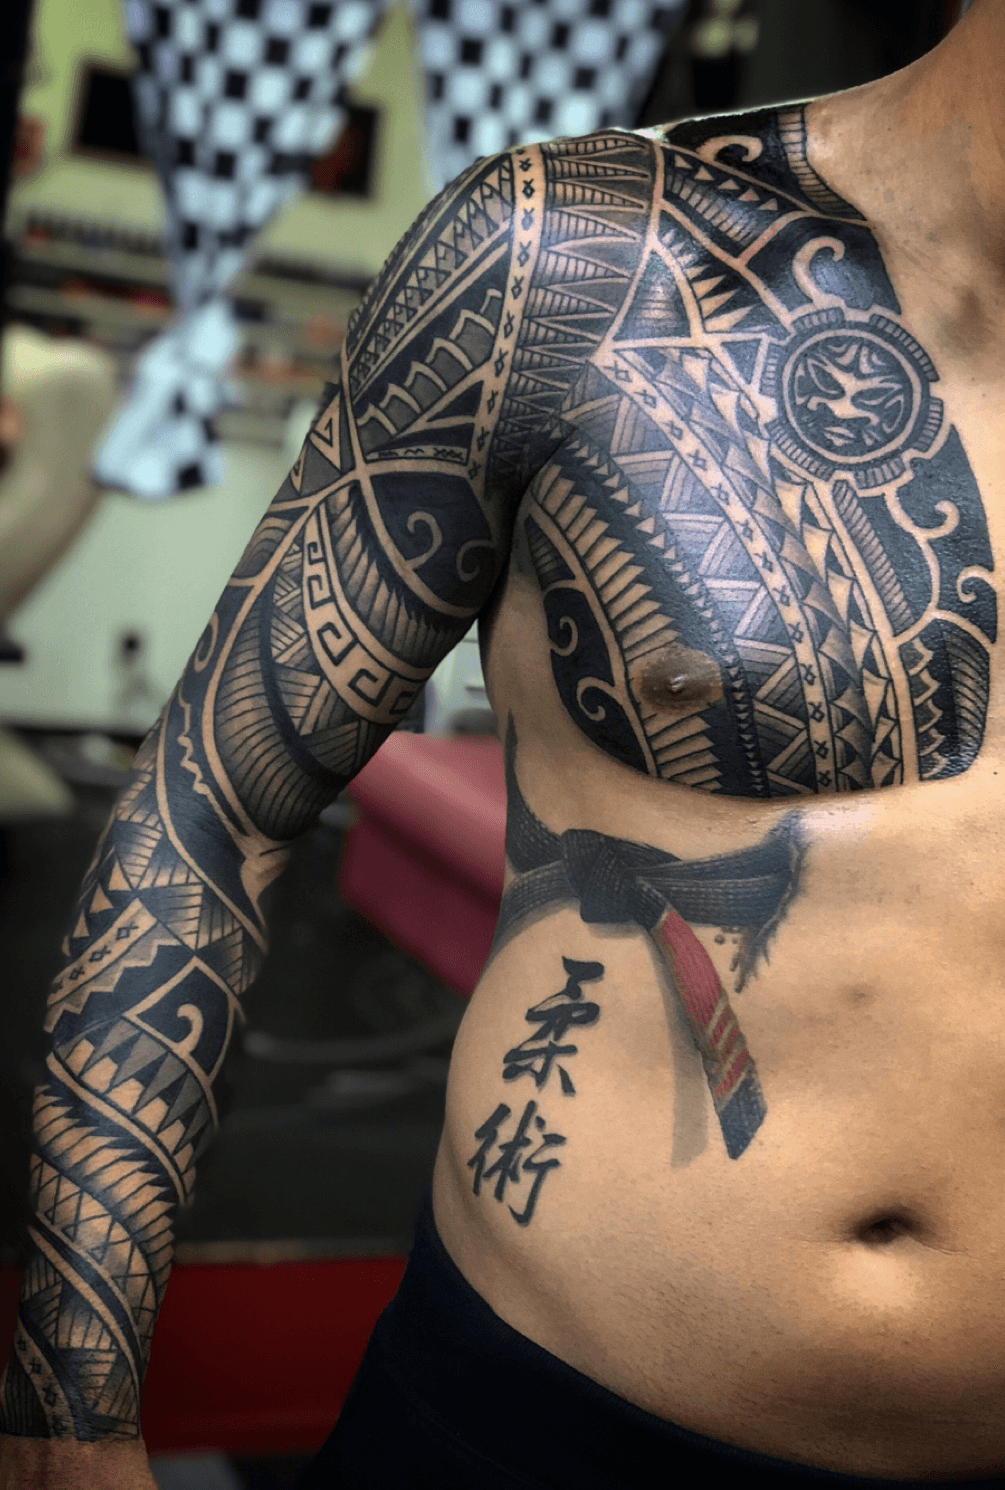 Sexy Tattoos Below The Belt  Inkaholik Tattoos and Piercing Studio